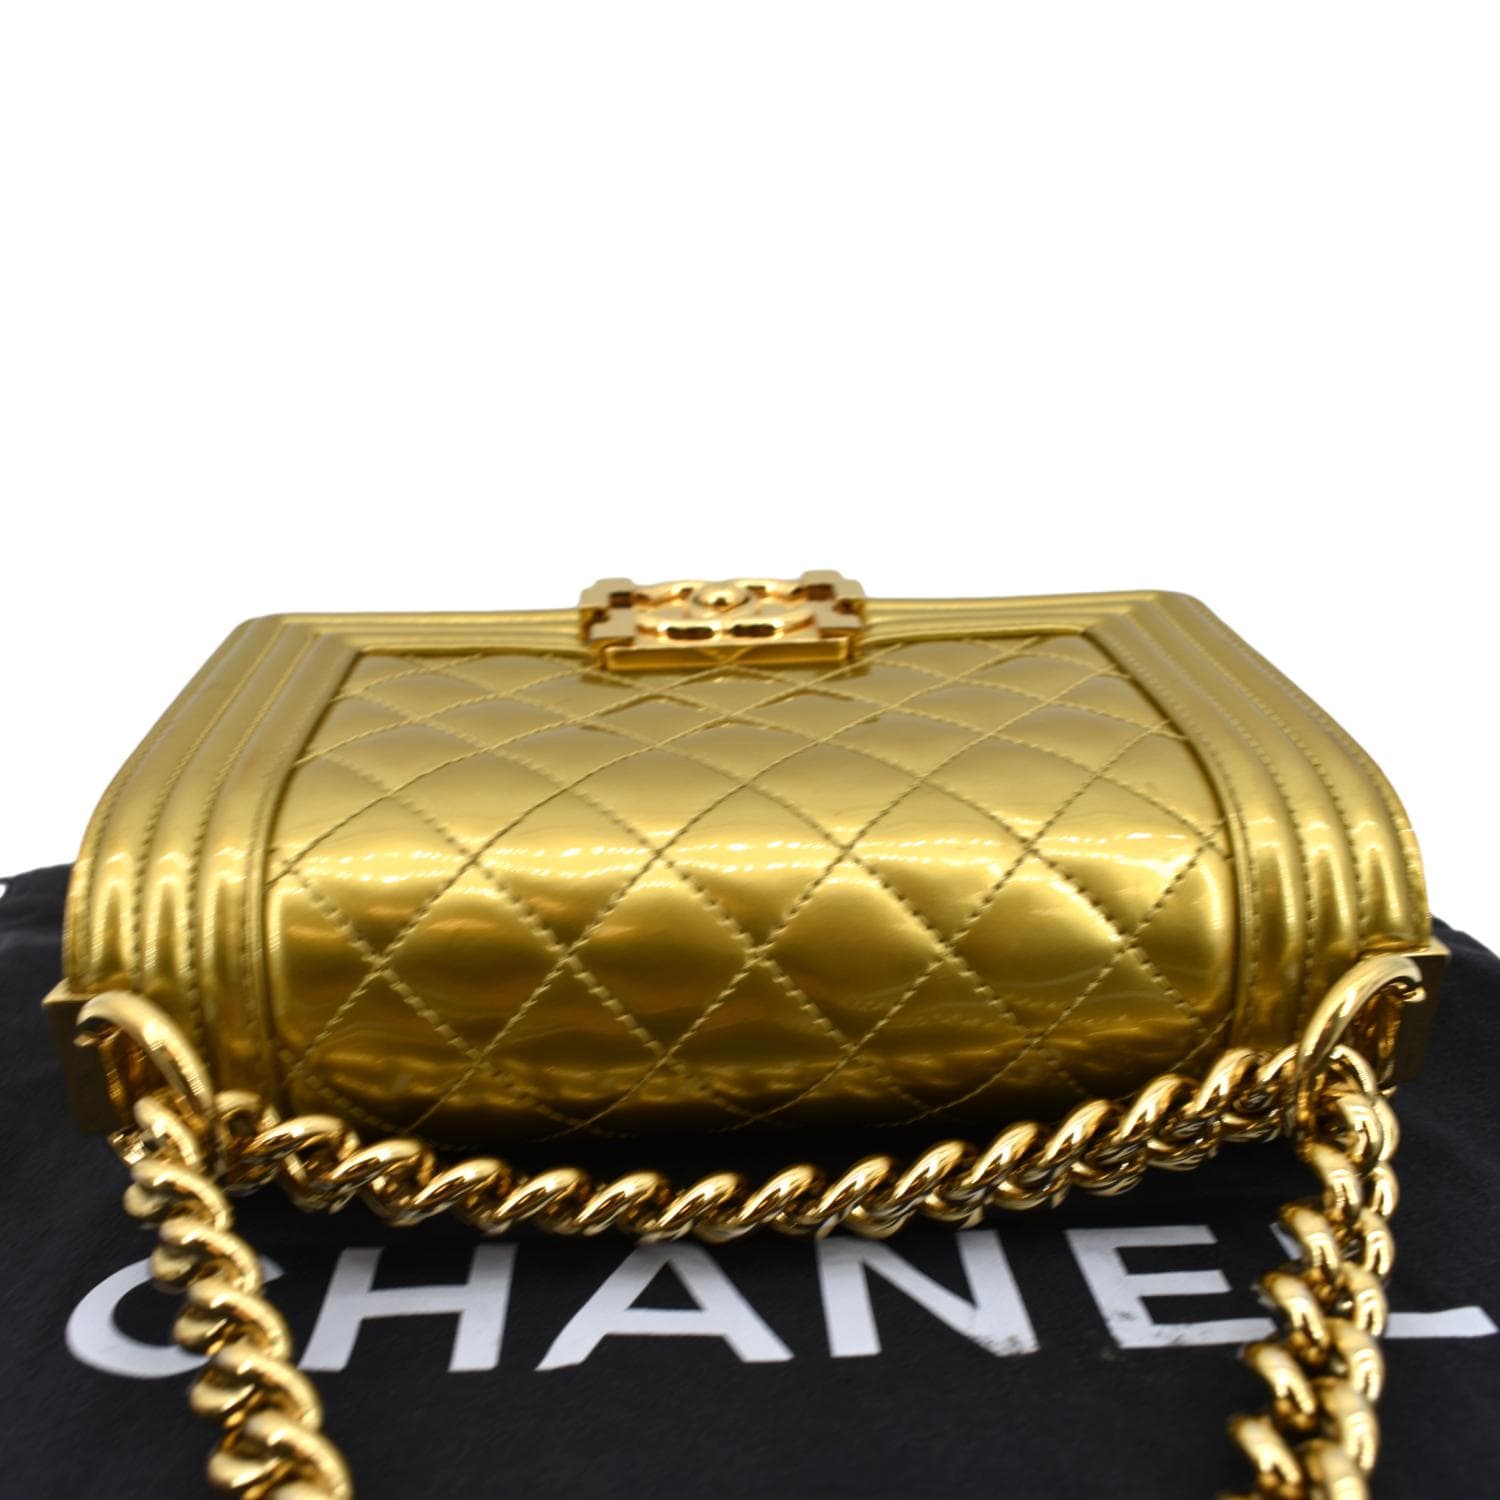 CHANEL Small Boy CC Chain Leather Shoulder Bag Metallic Gold